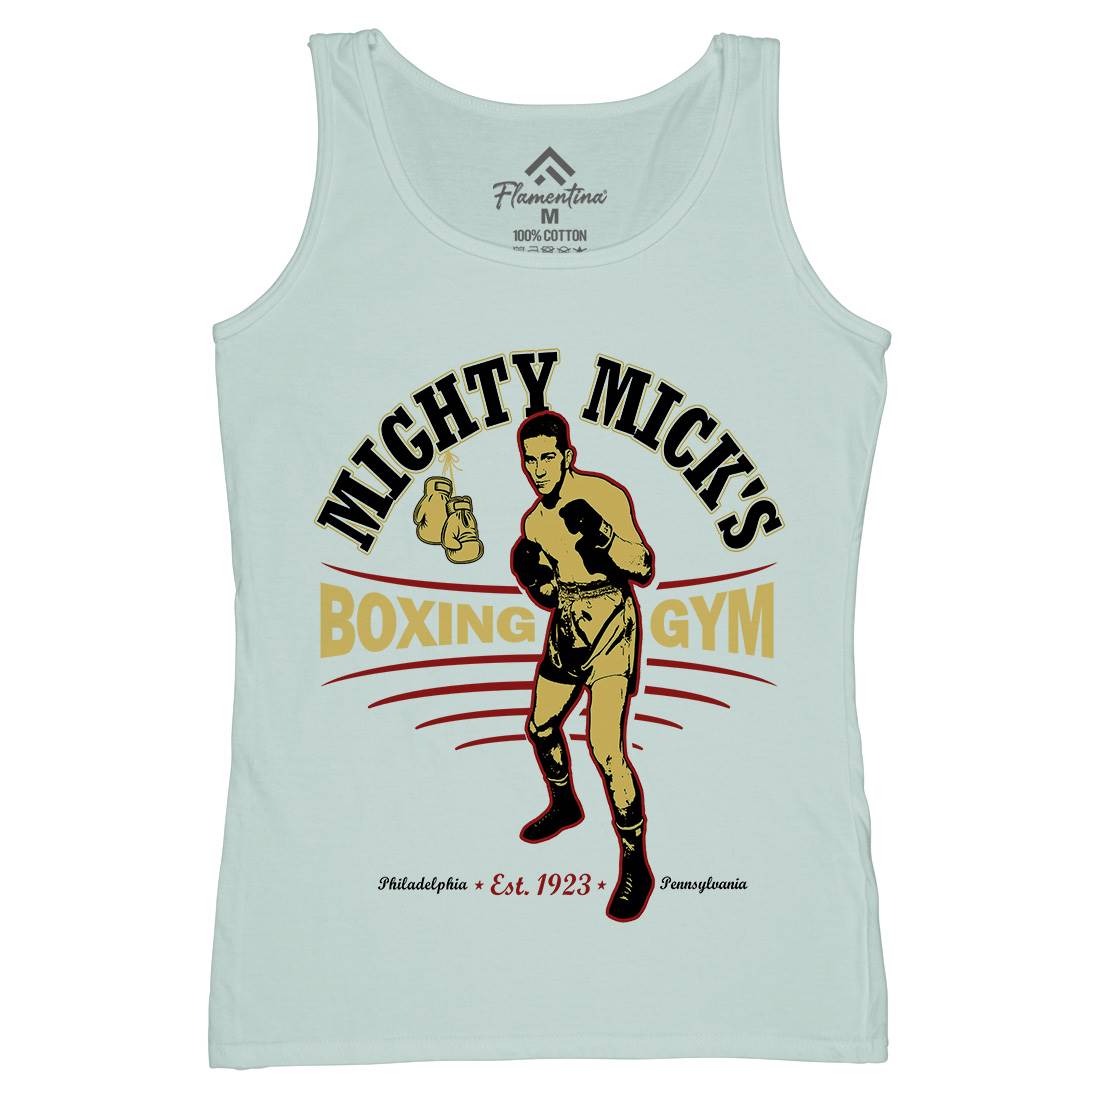 Mighty Micks Gym Womens Organic Tank Top Vest Sport D276